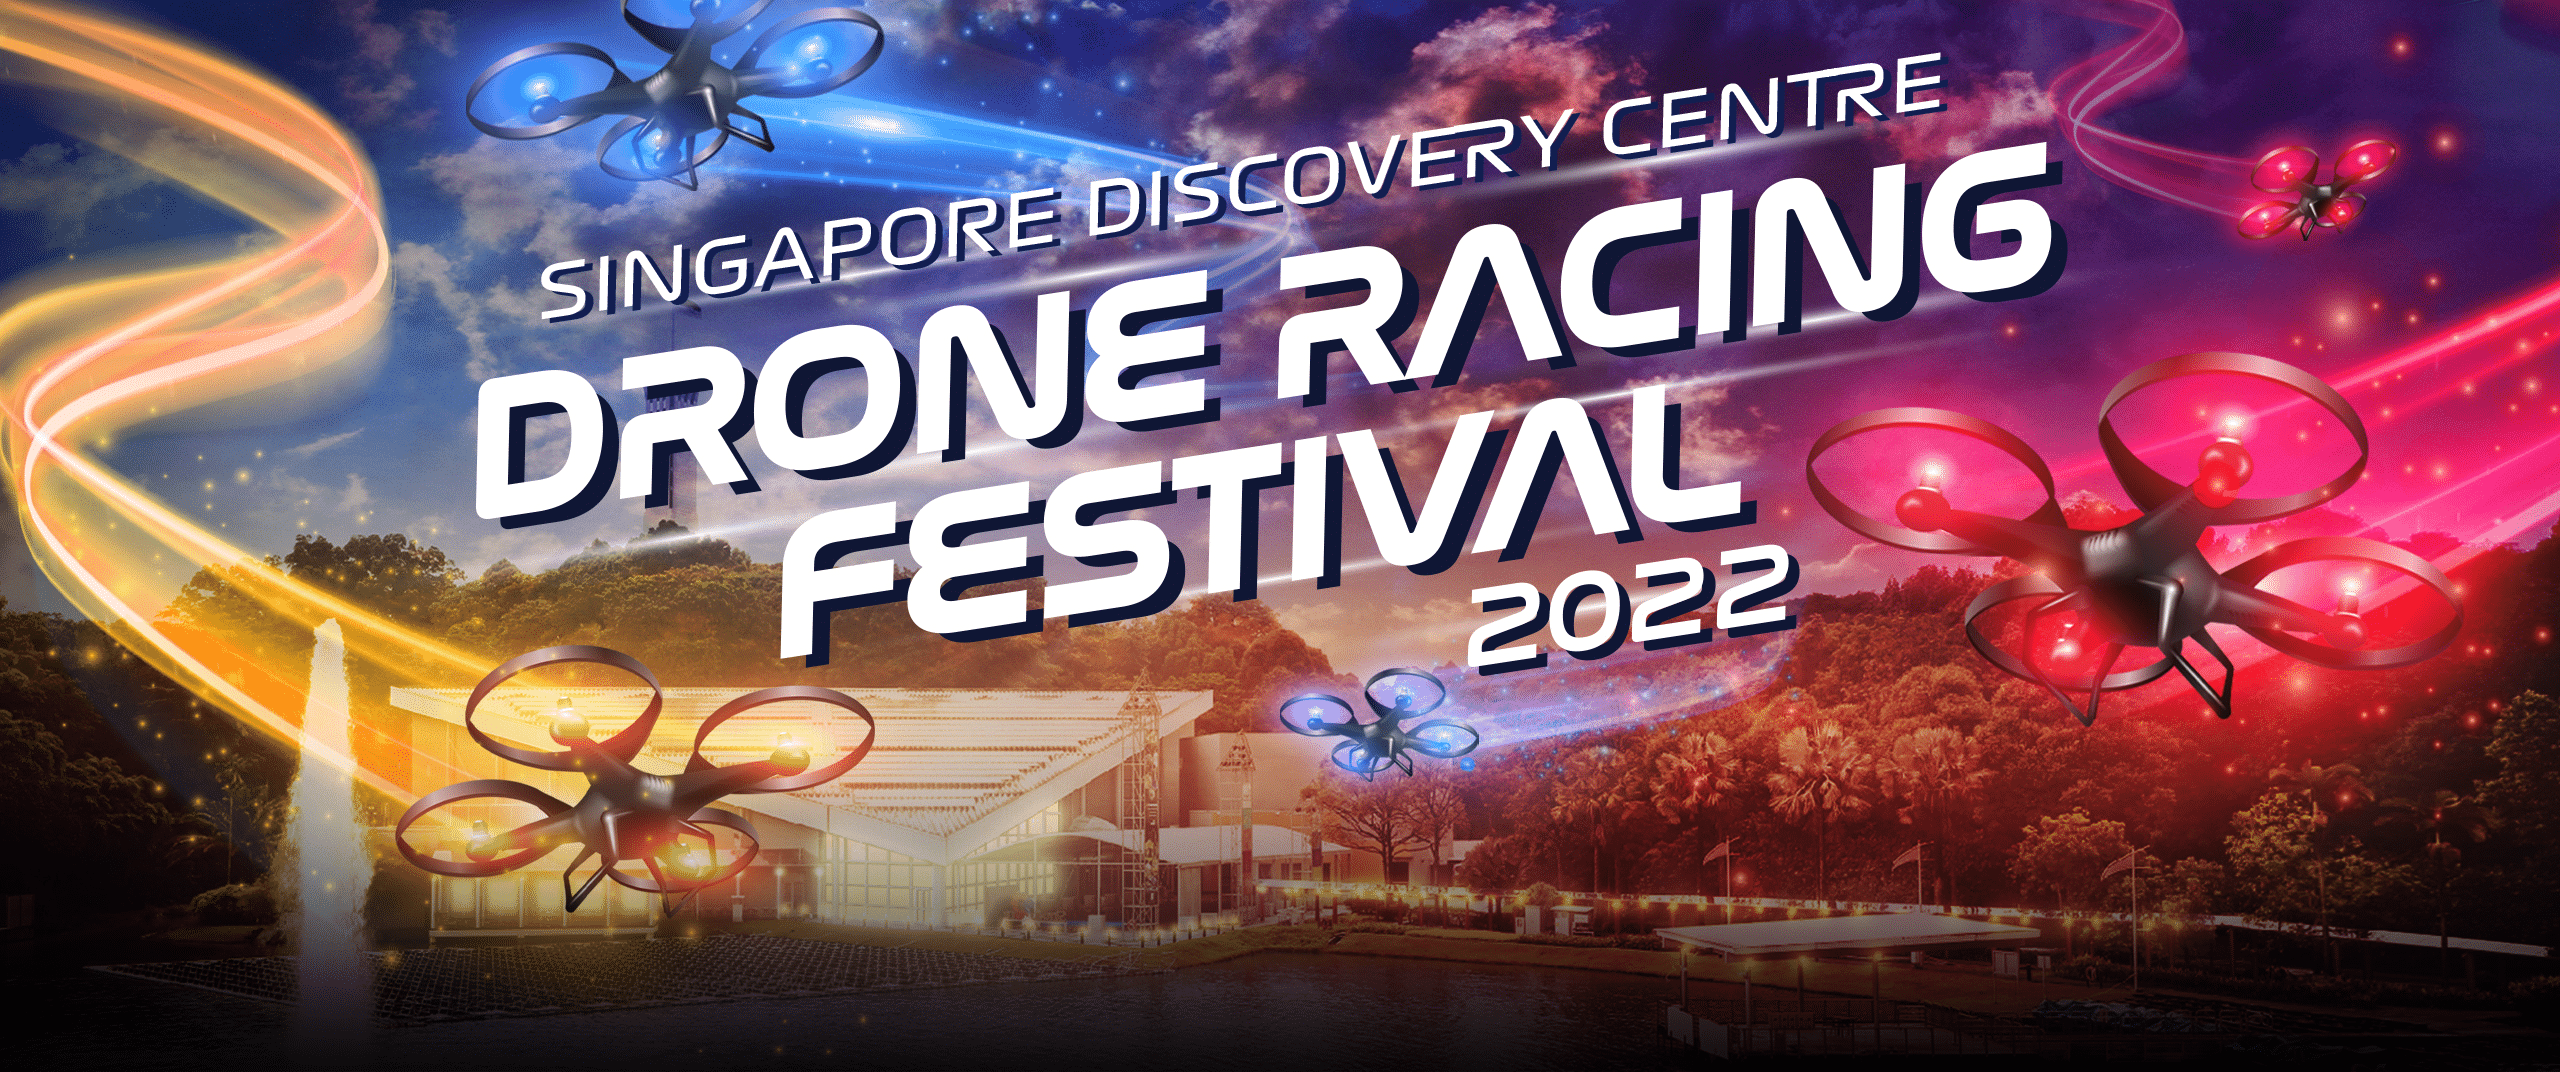 Singapore Discovery Centre Drone Racing Festival 2022